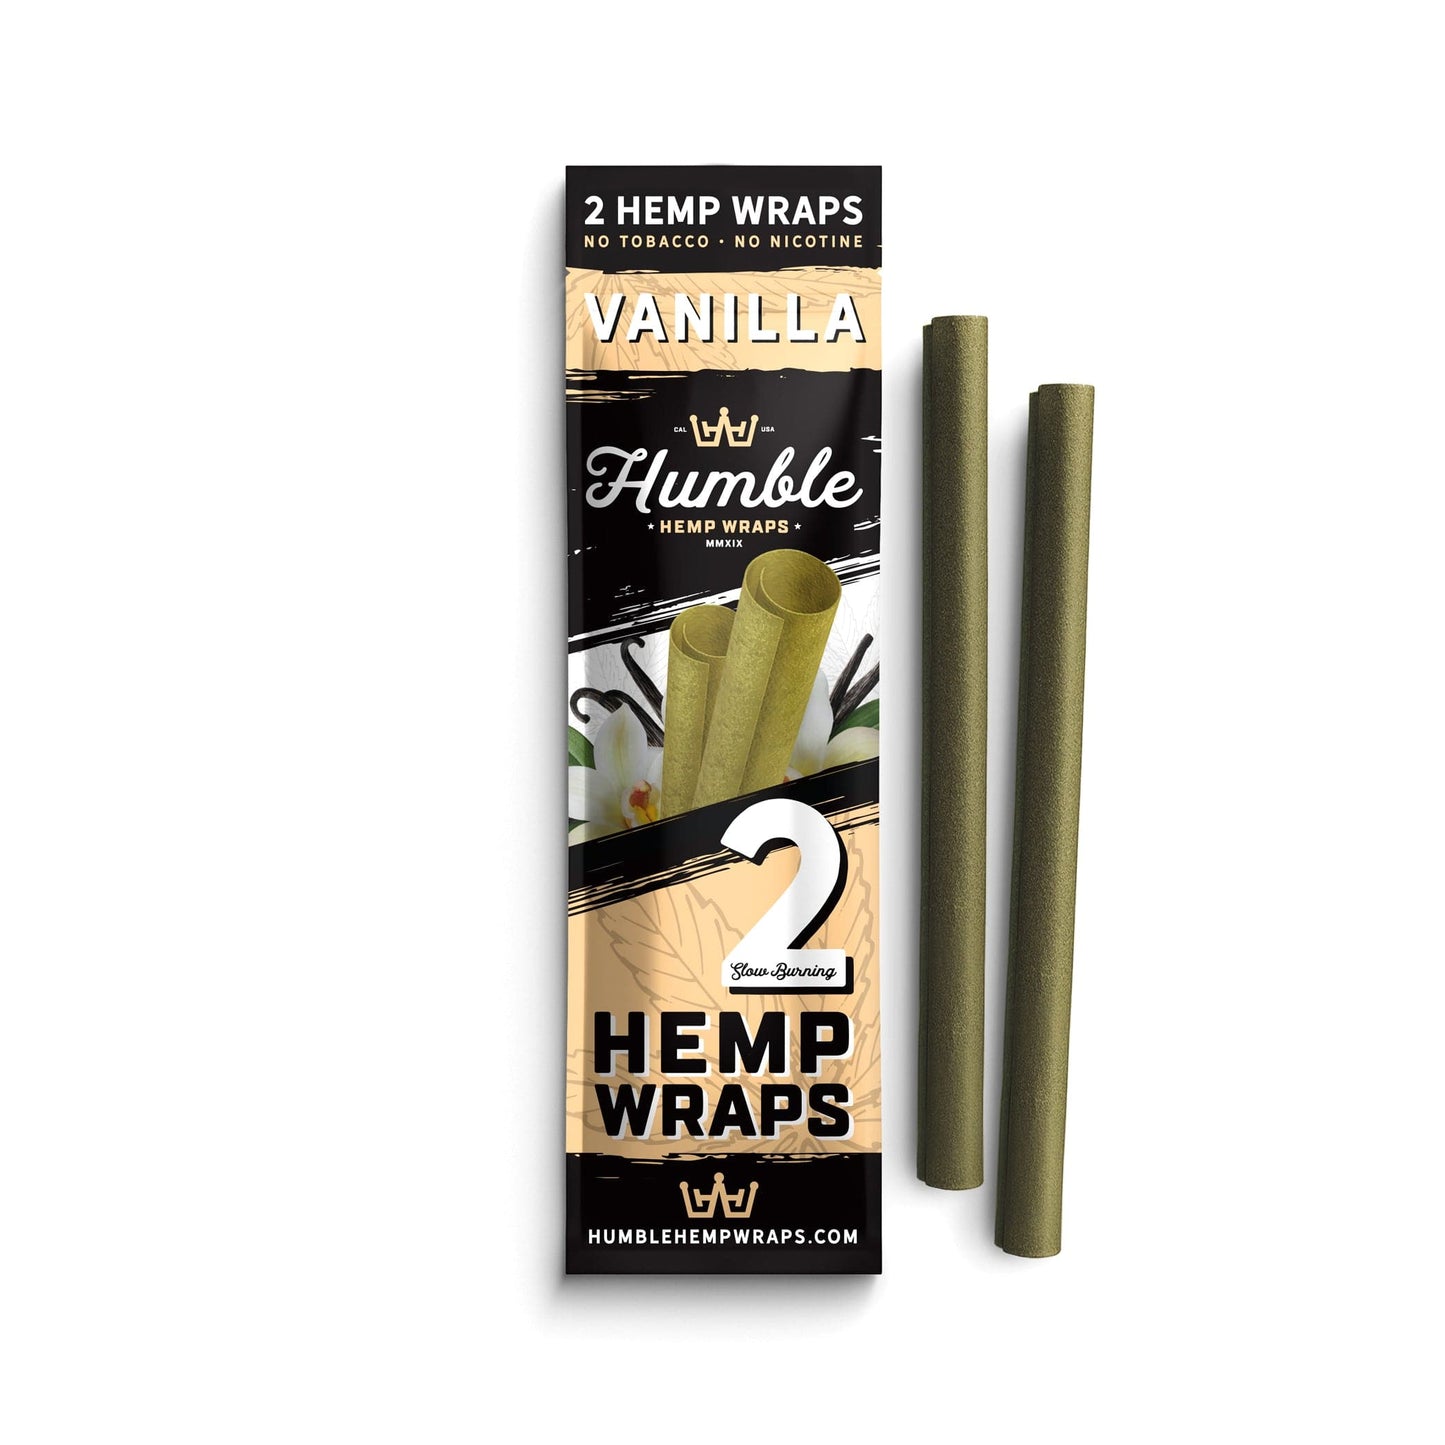 Humble Hemp Wraps - Vanilla - 25 Pack